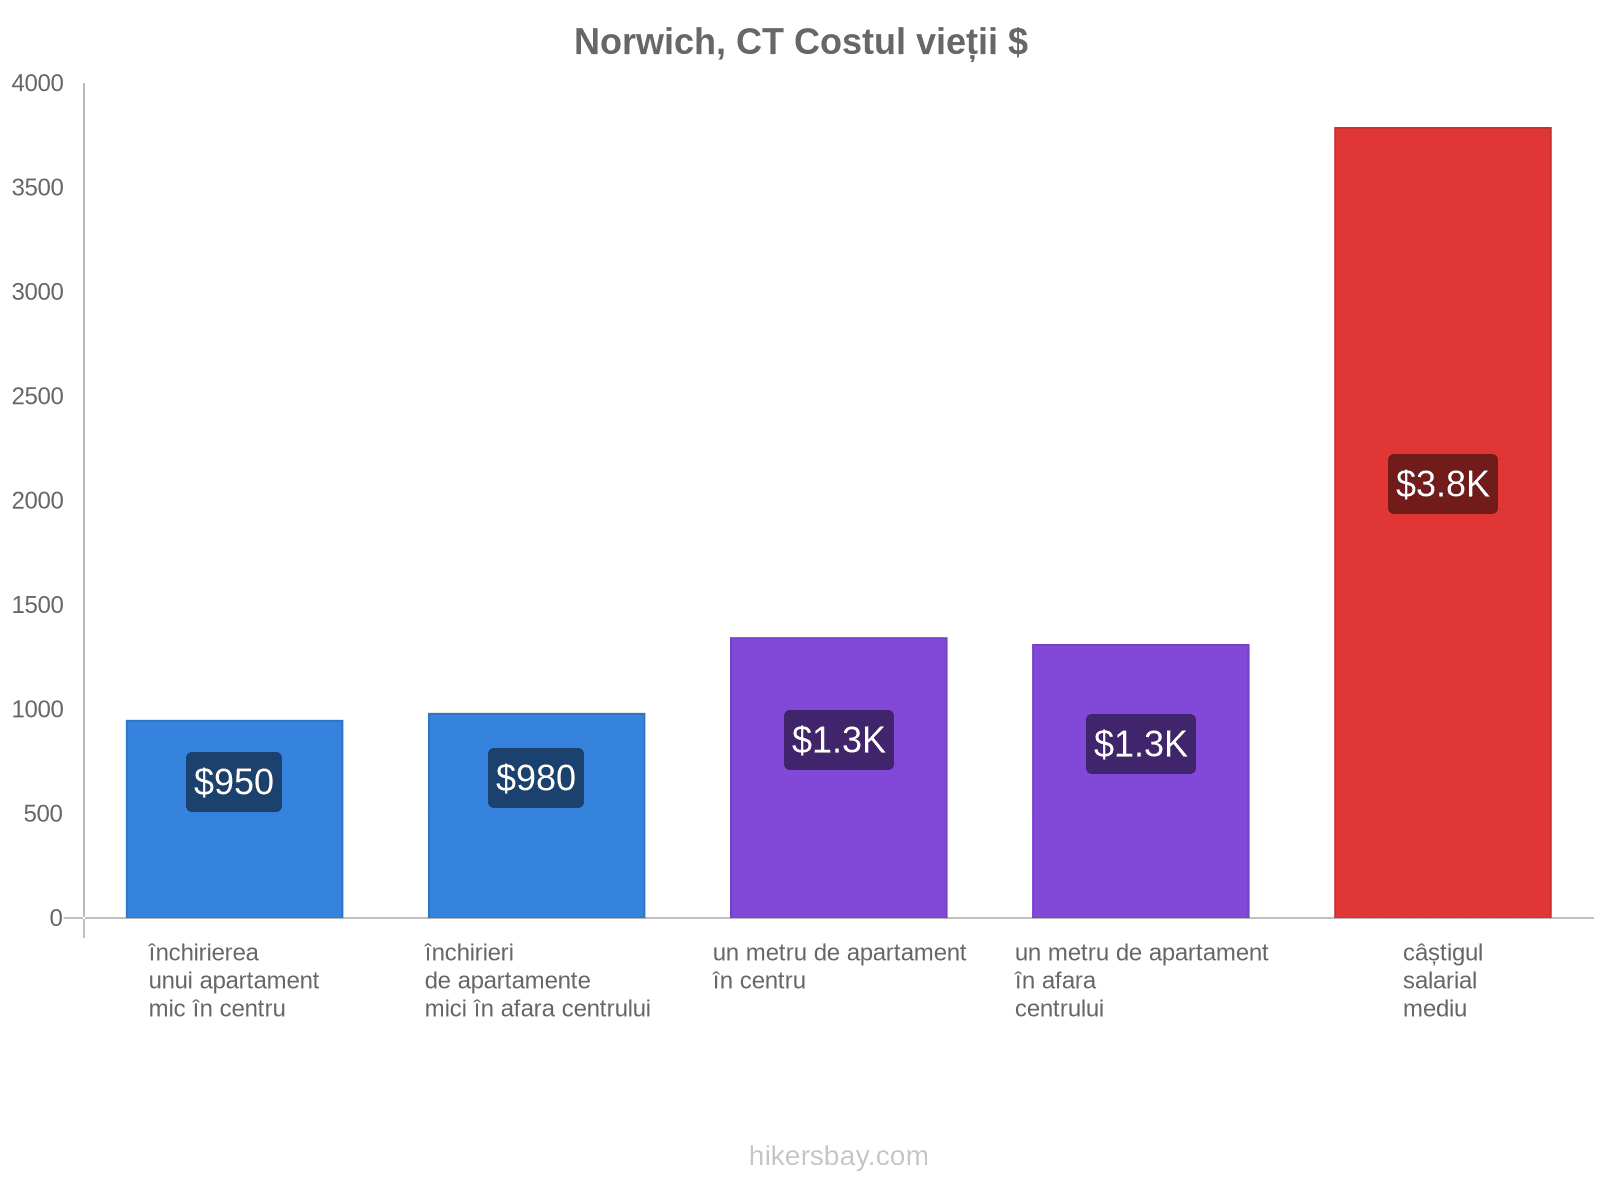 Norwich, CT costul vieții hikersbay.com